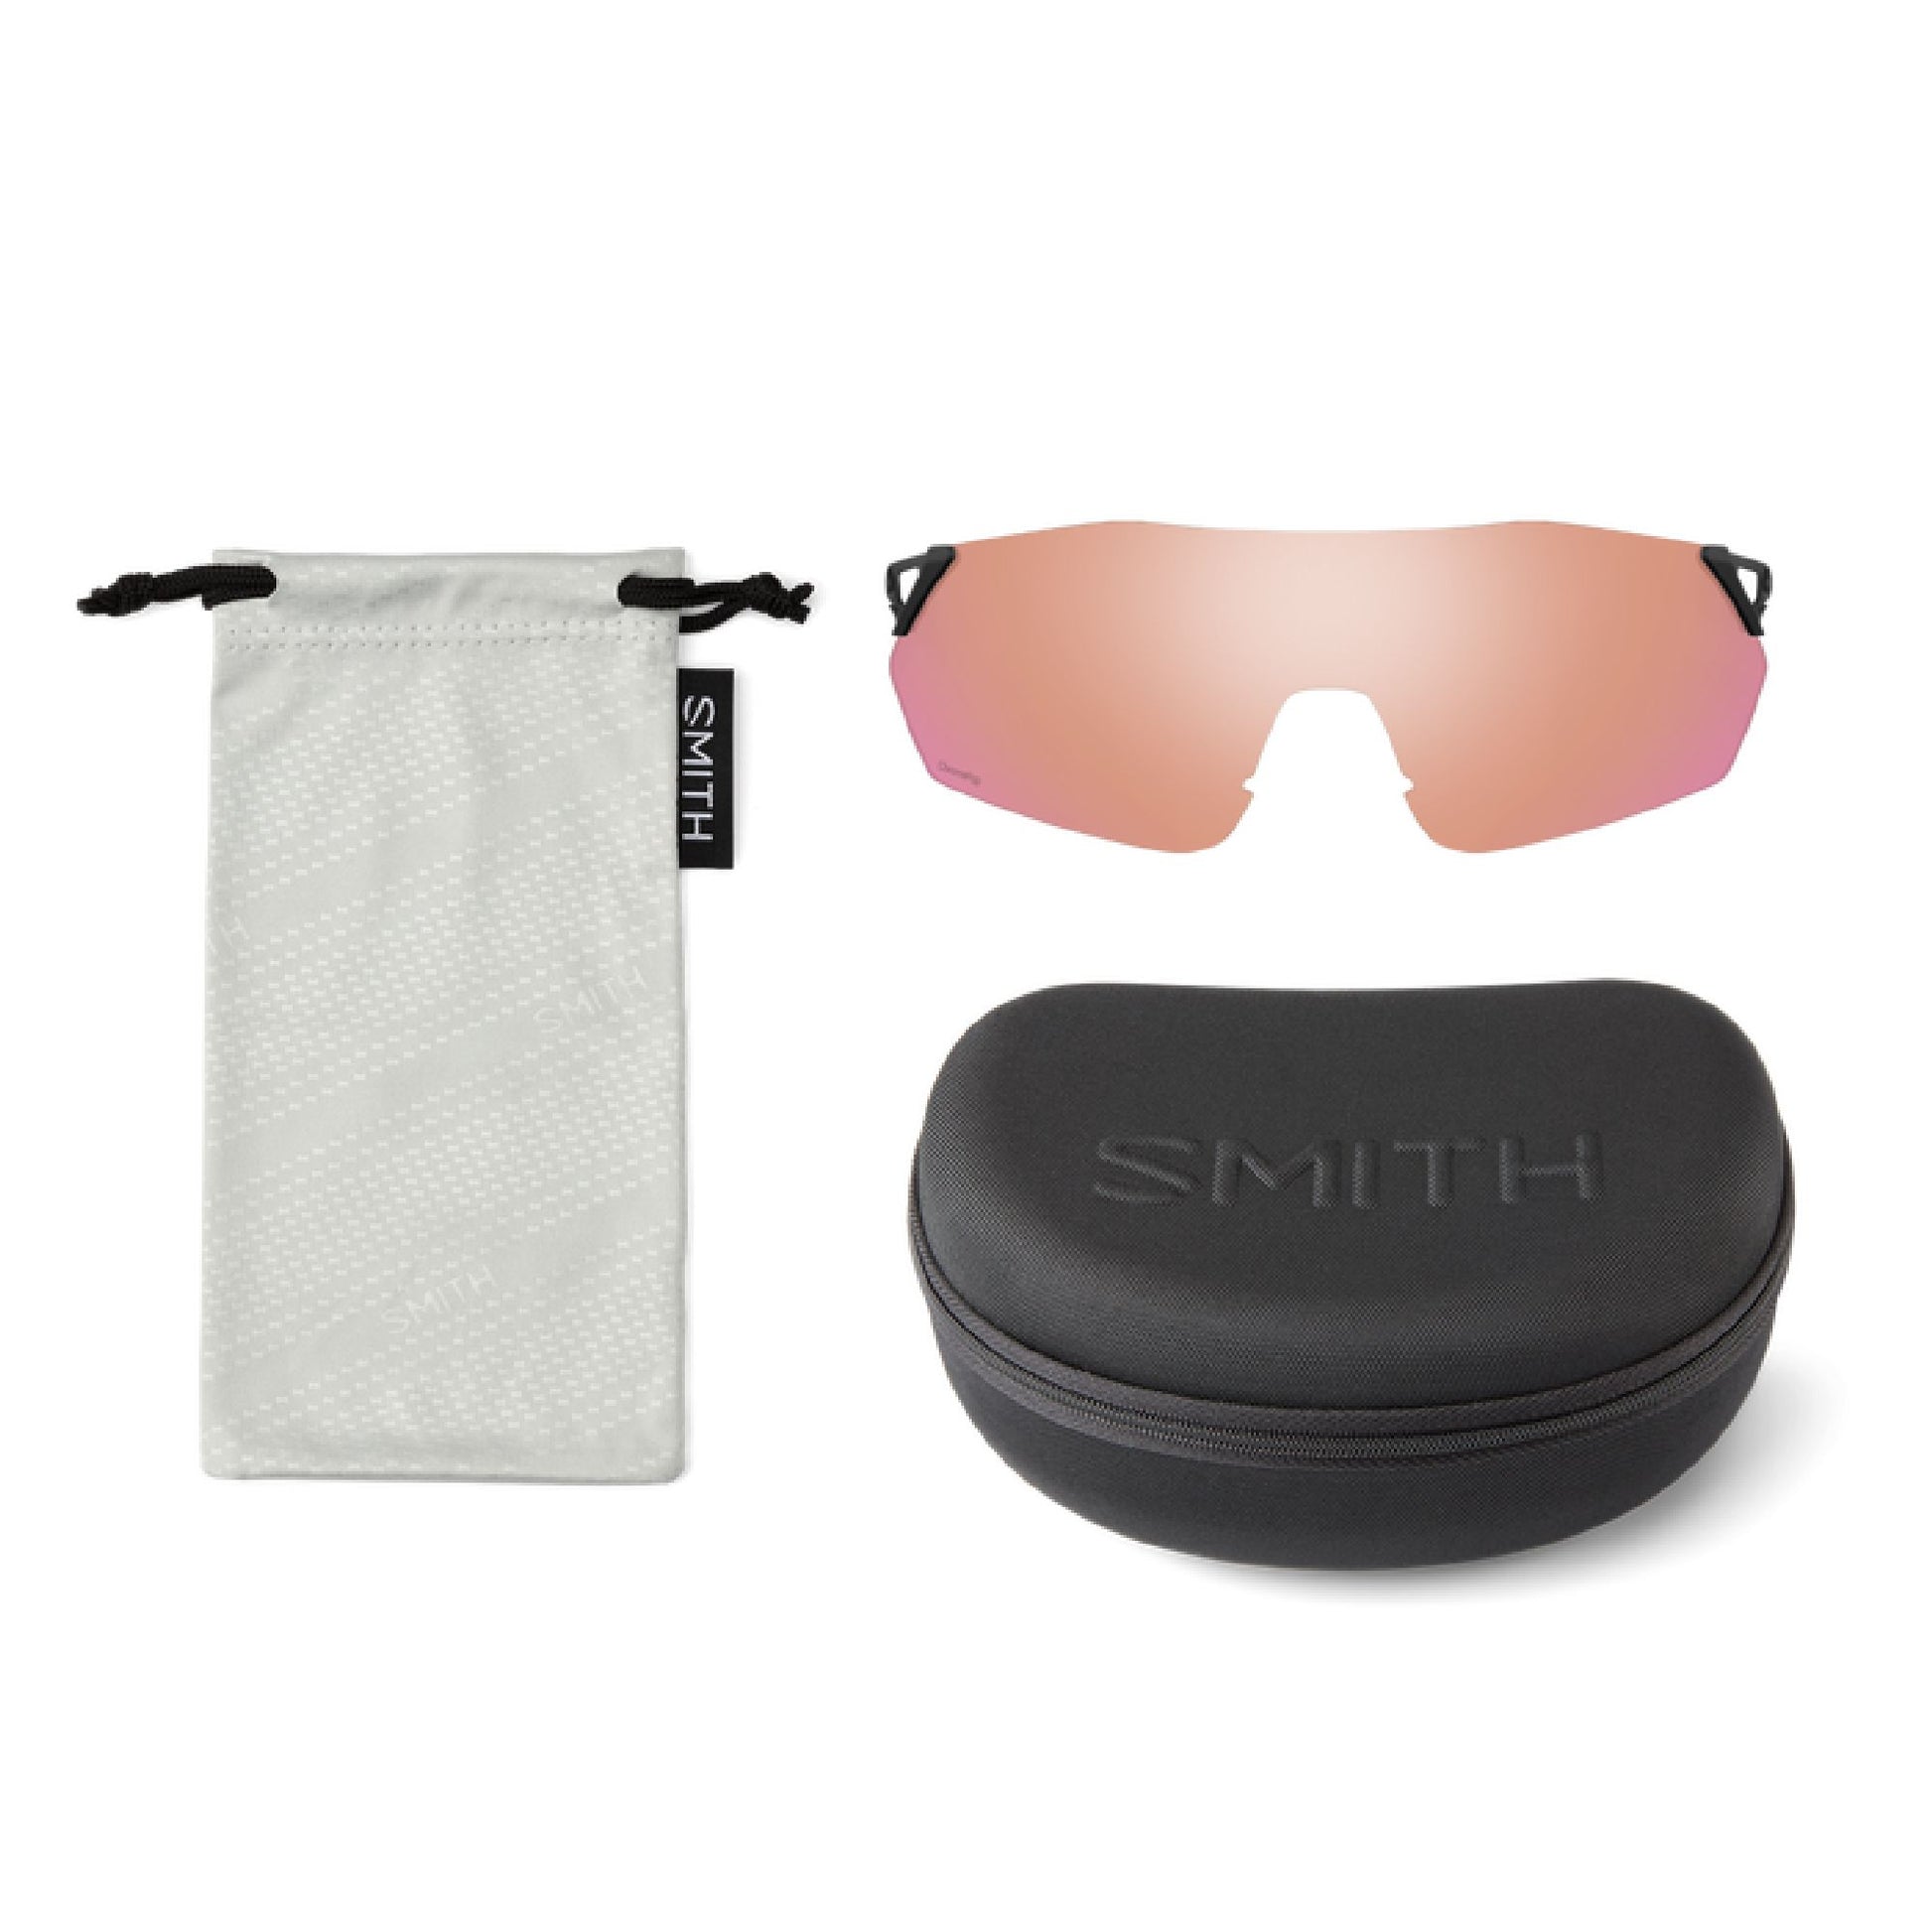 Smith Reverb Sunglasses Matte White ChromaPop Violet Mirror Sunglasses